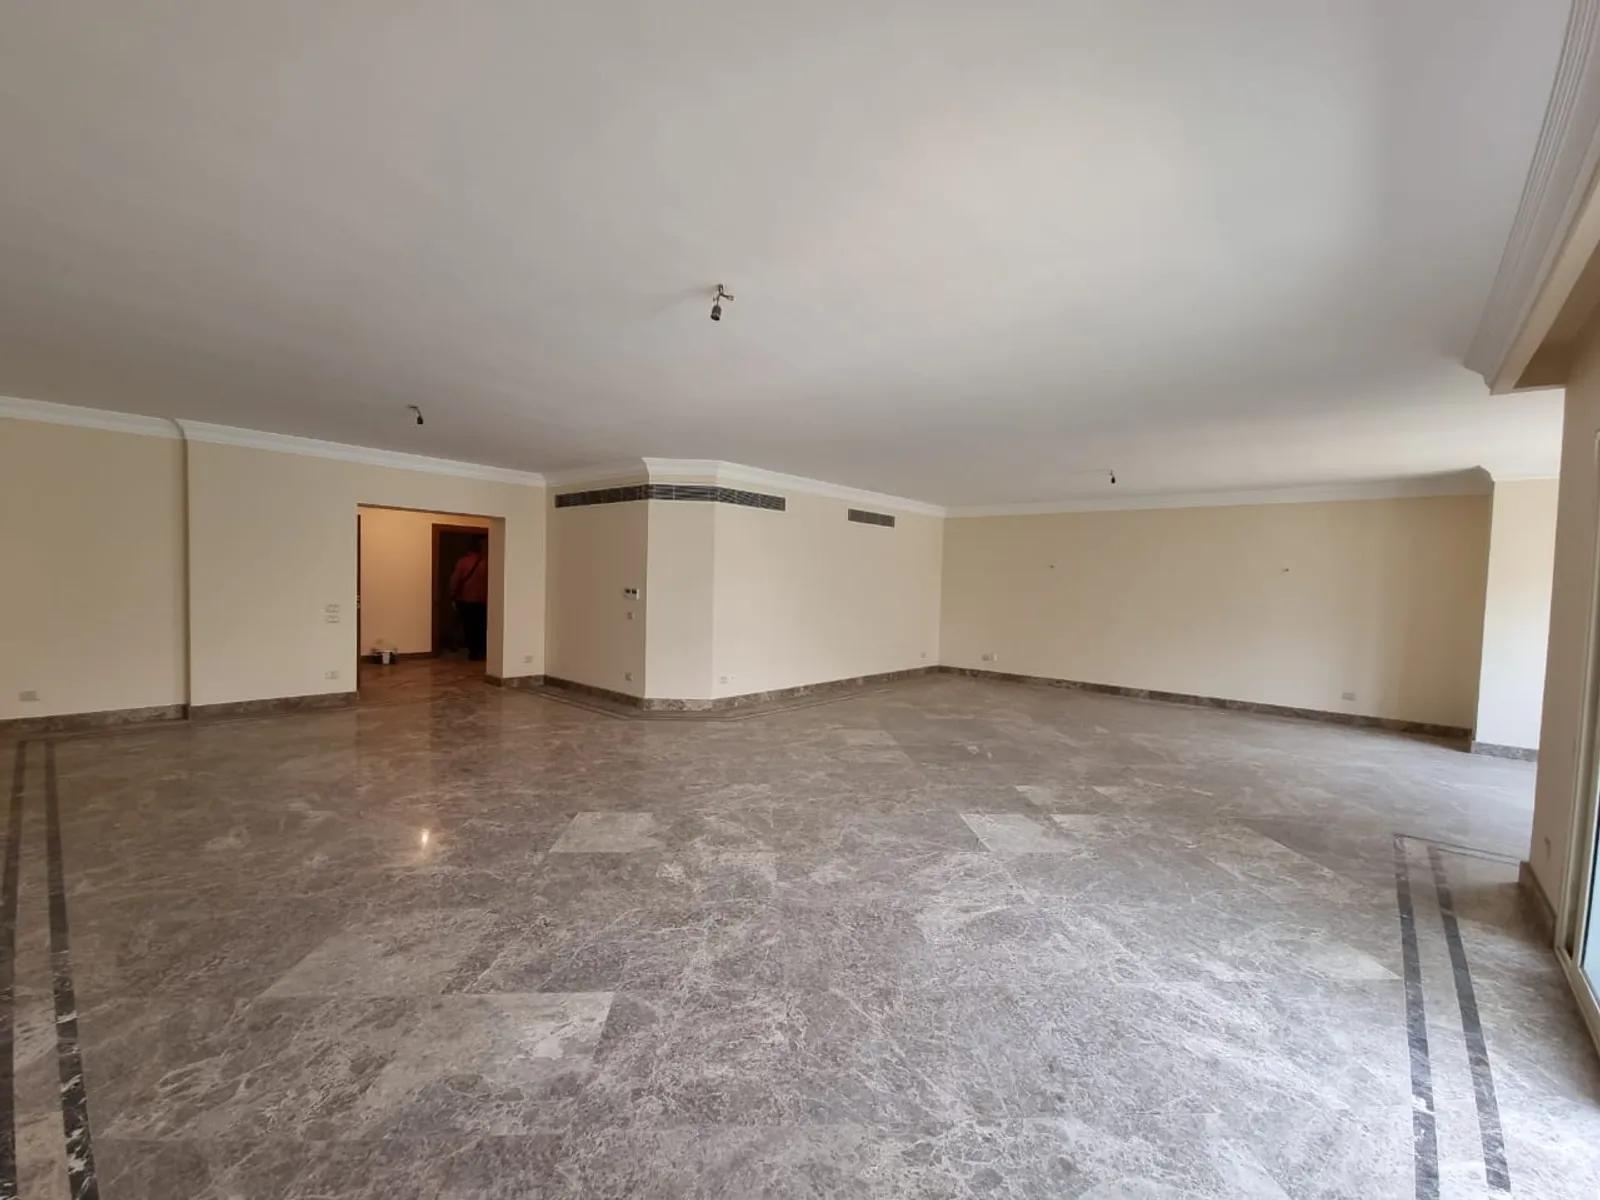 Apartments For Sale In Maadi Maadi Sarayat Area: 360 m² consists of 4 Bedrooms 4 Bathrooms Semi furnished 5 stars #5556